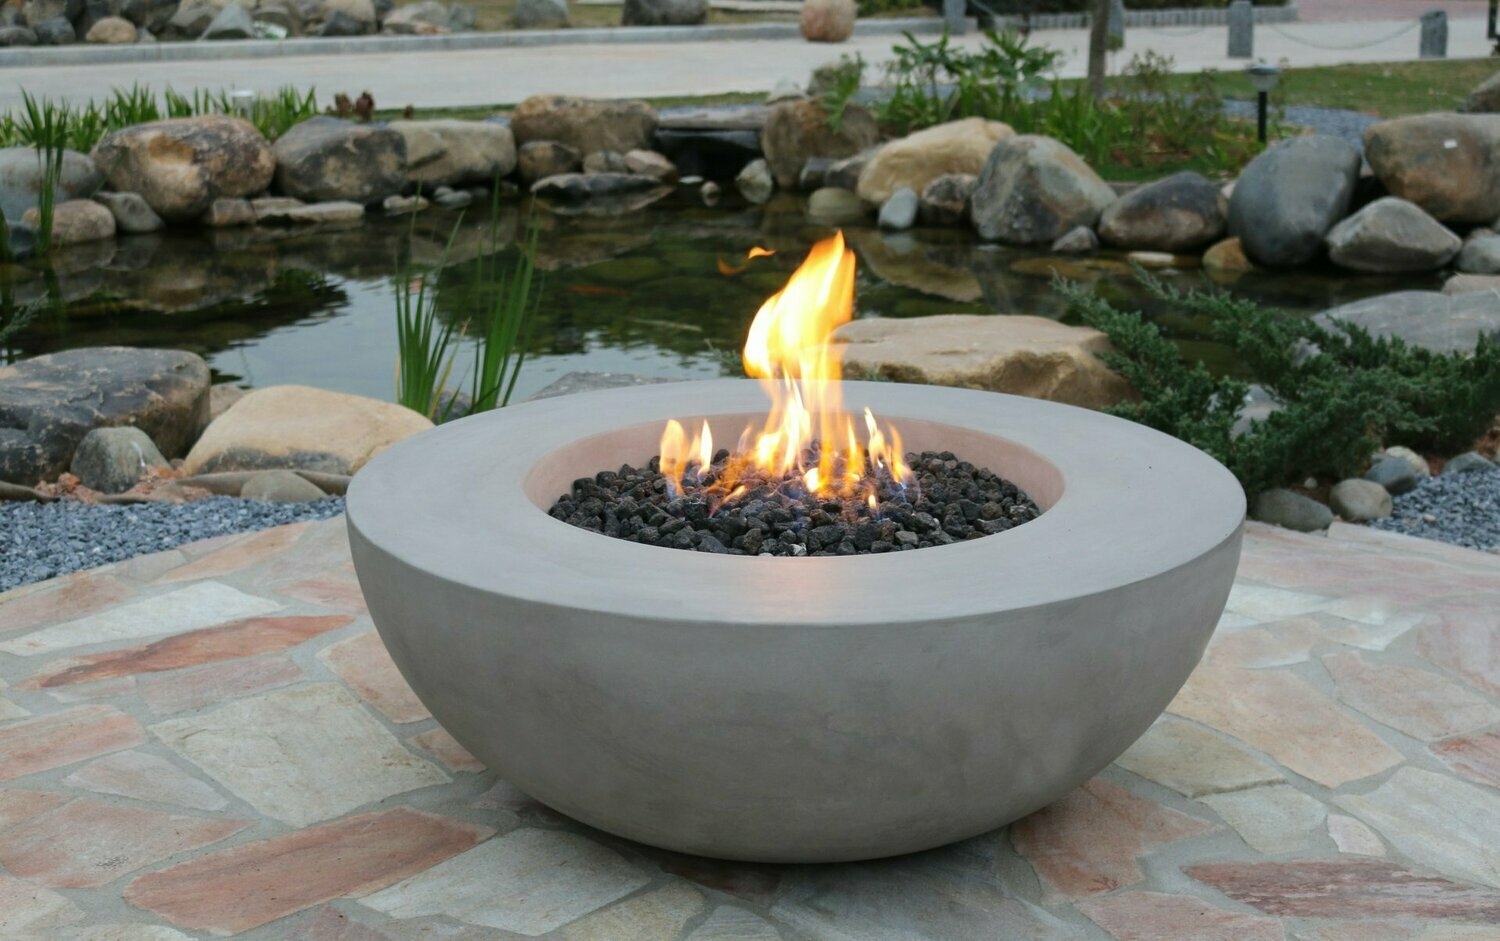 Elementi Lunar Bowl Fire Table – LPG Bottle – Outdoor Fire Pit – Forno Boutique